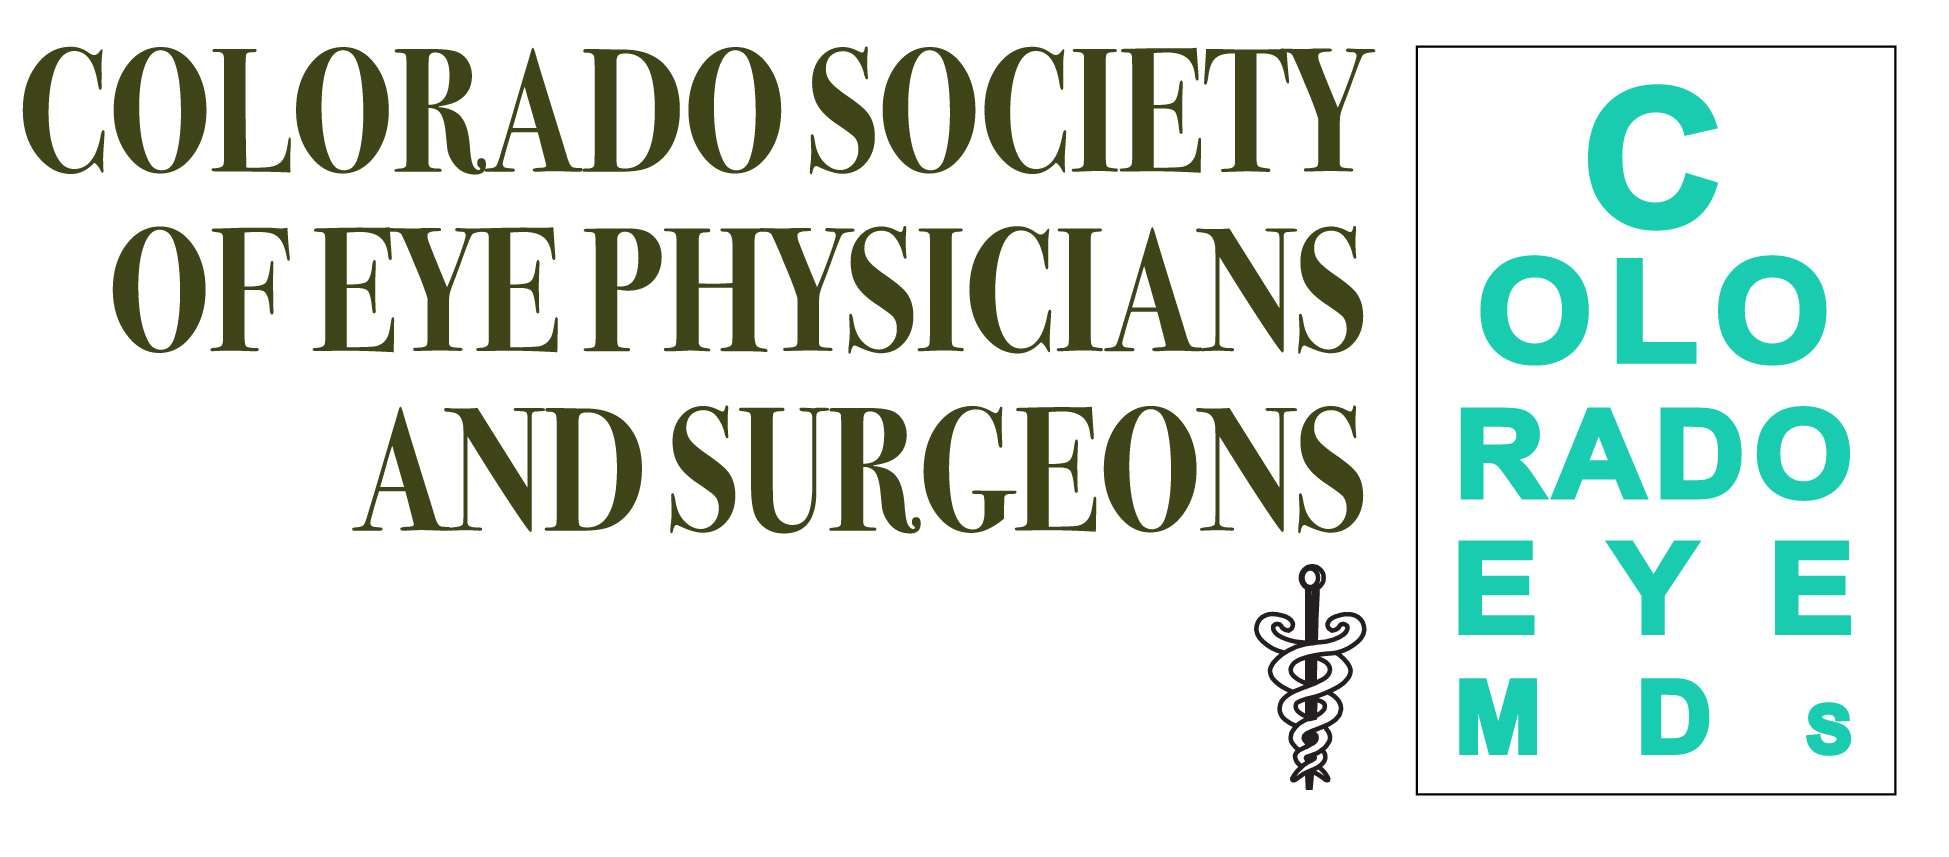 Colorado Society of Eye Physicians and Surgeons Logo